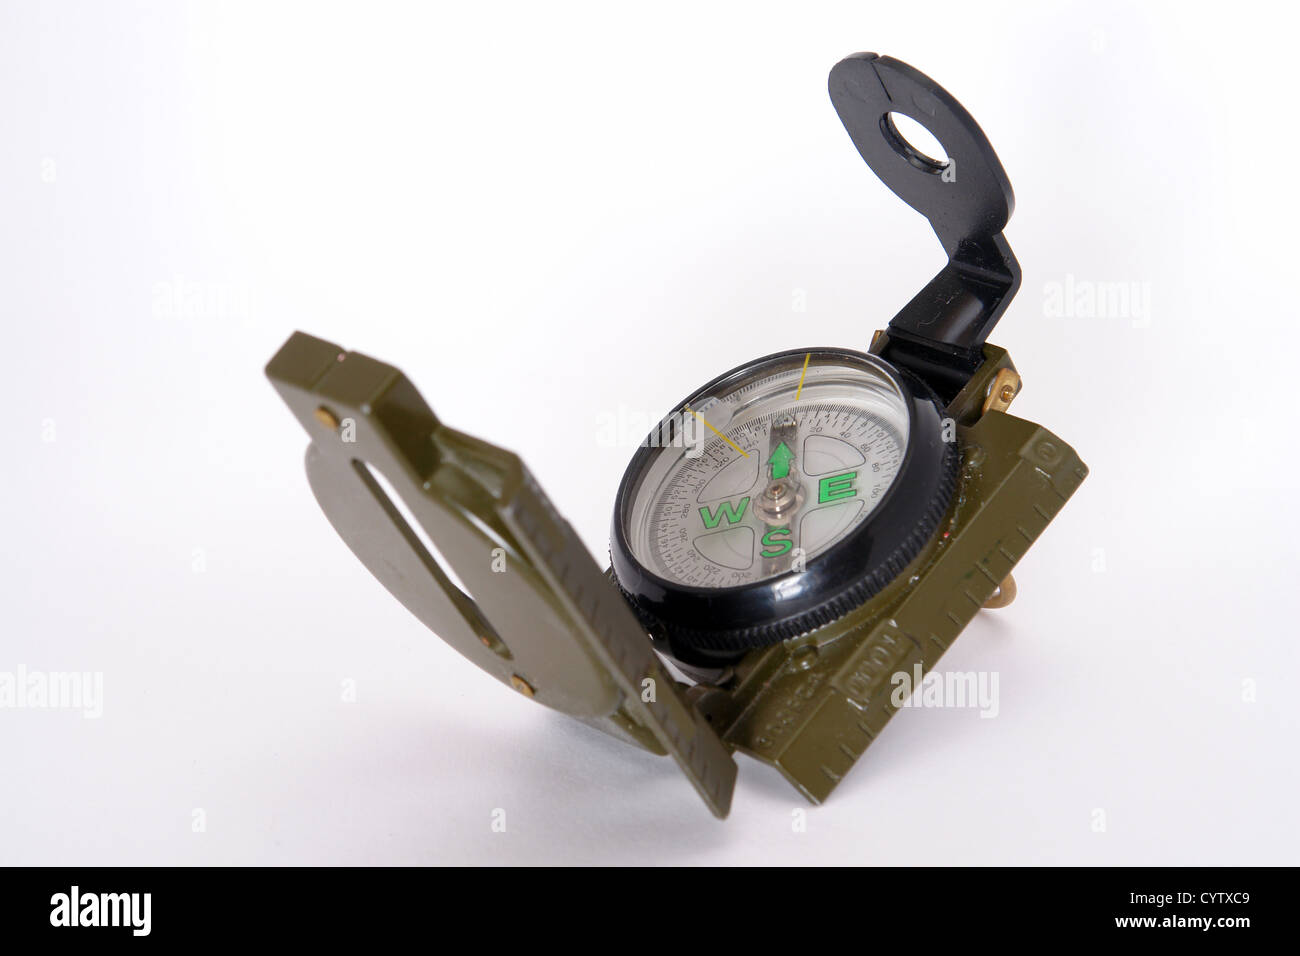 Substantive film military compass Stock Photo - Alamy